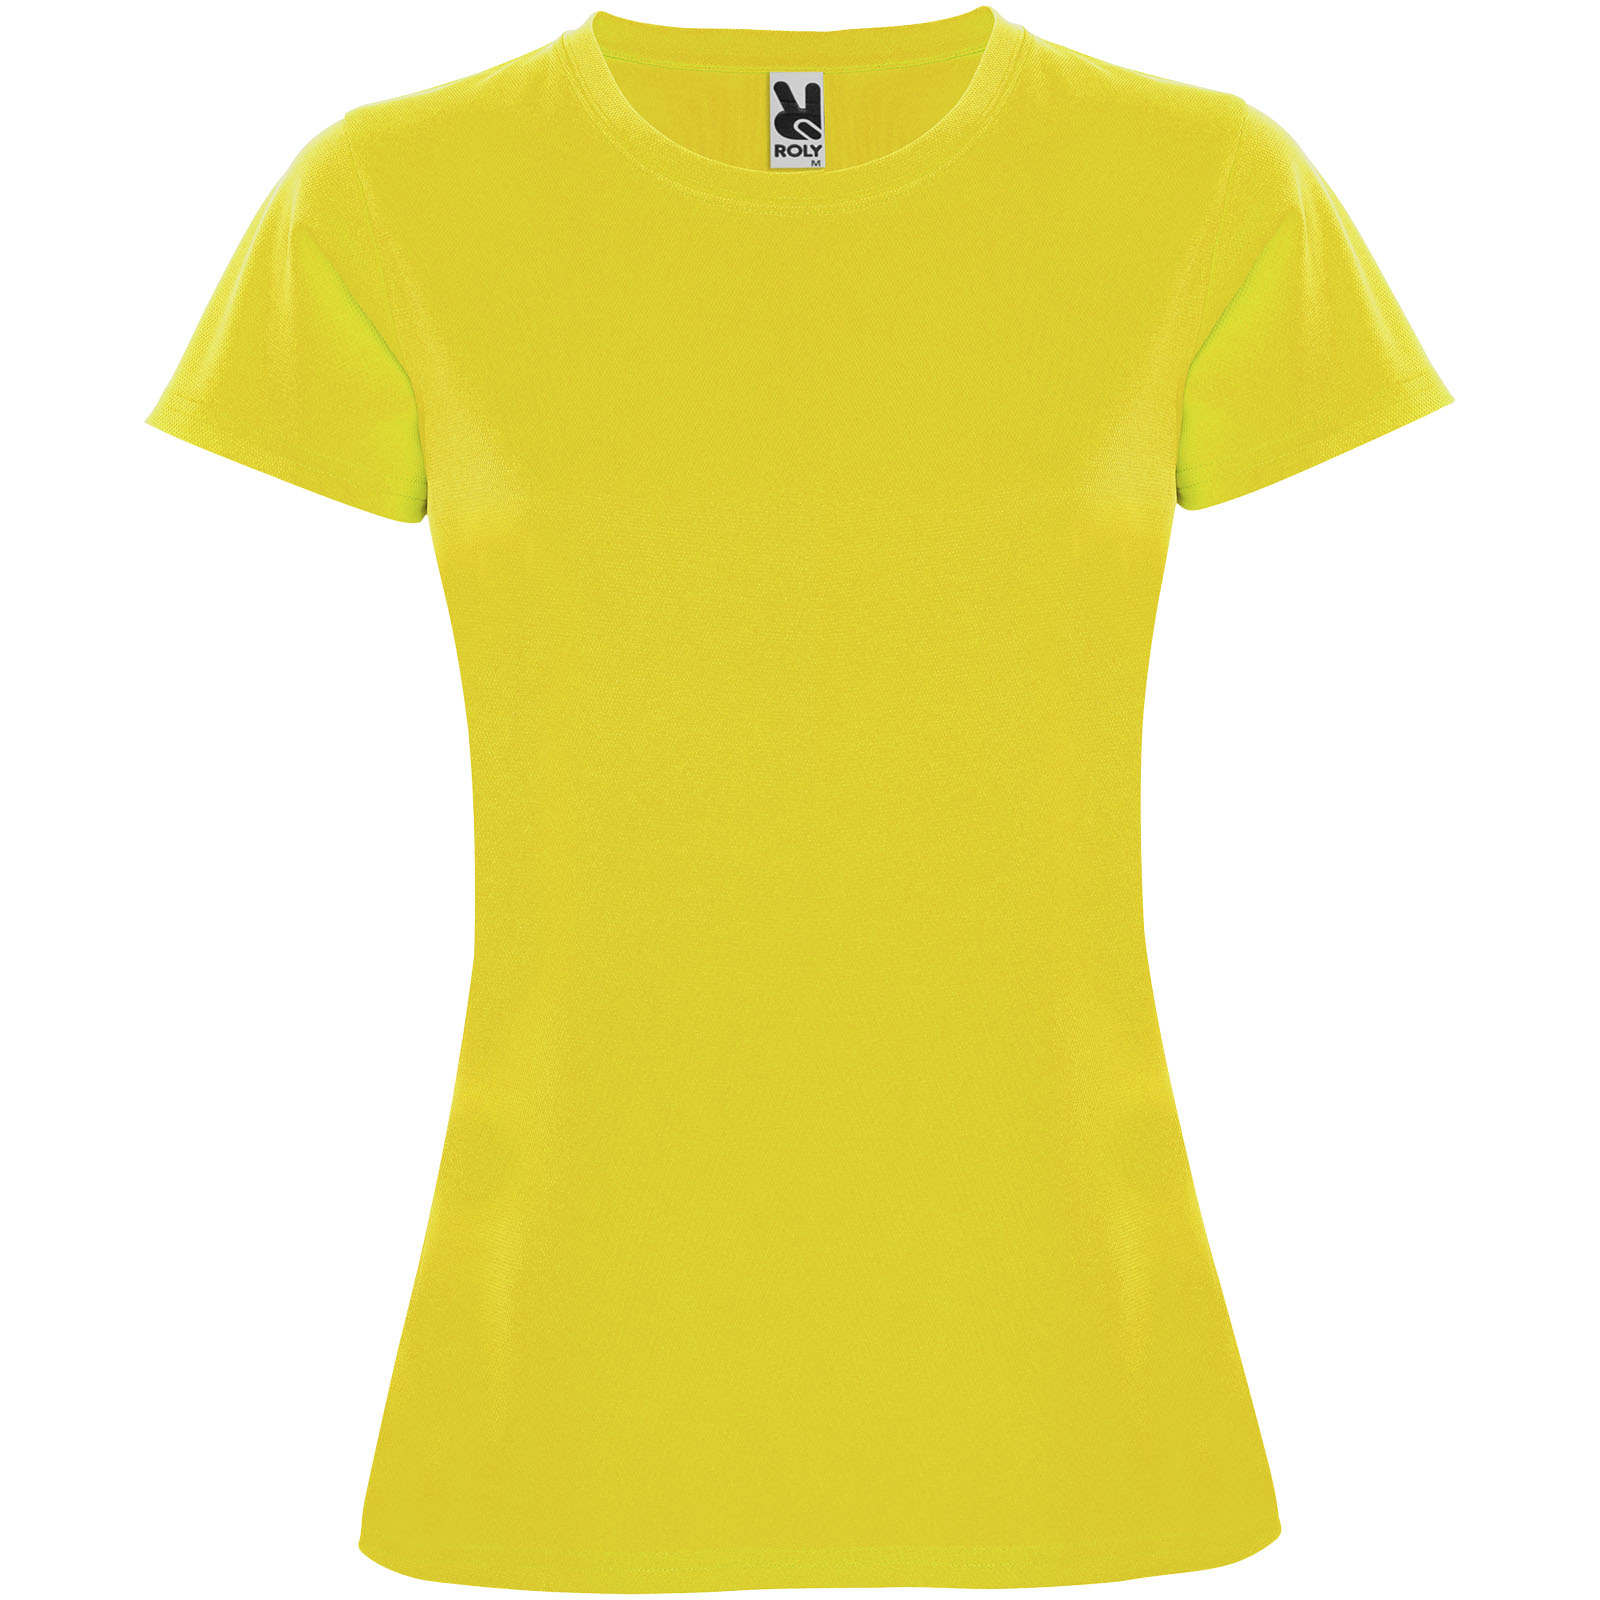 Women's short sleeve sports t-shirt from Montecarlo - Newmarket